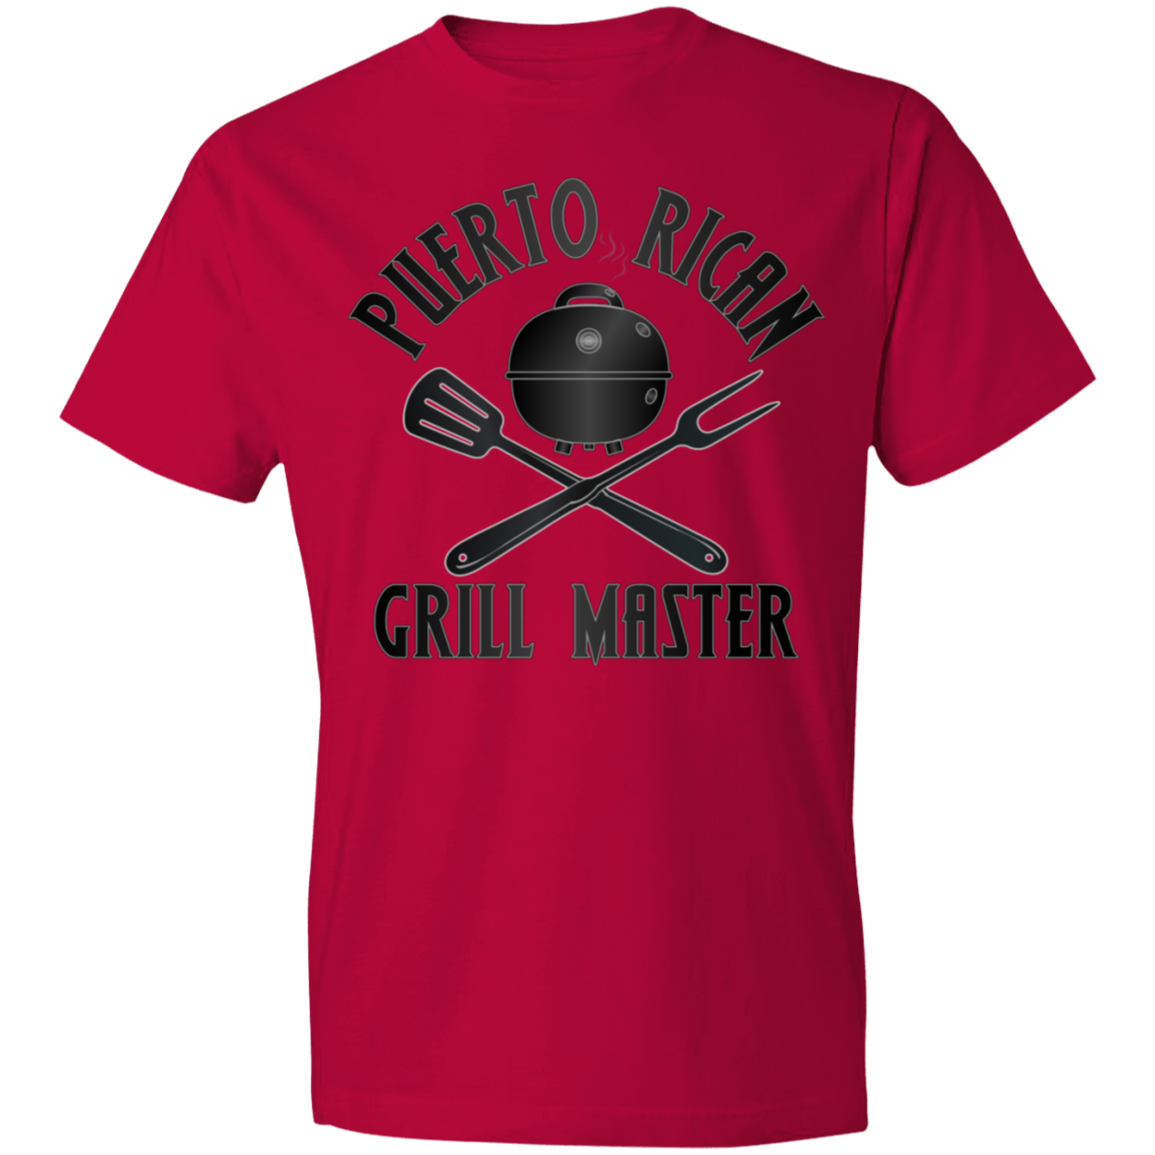 Puerto Rican Grill Master Lightweight T-Shirt 4.5 oz - Puerto Rican Pride